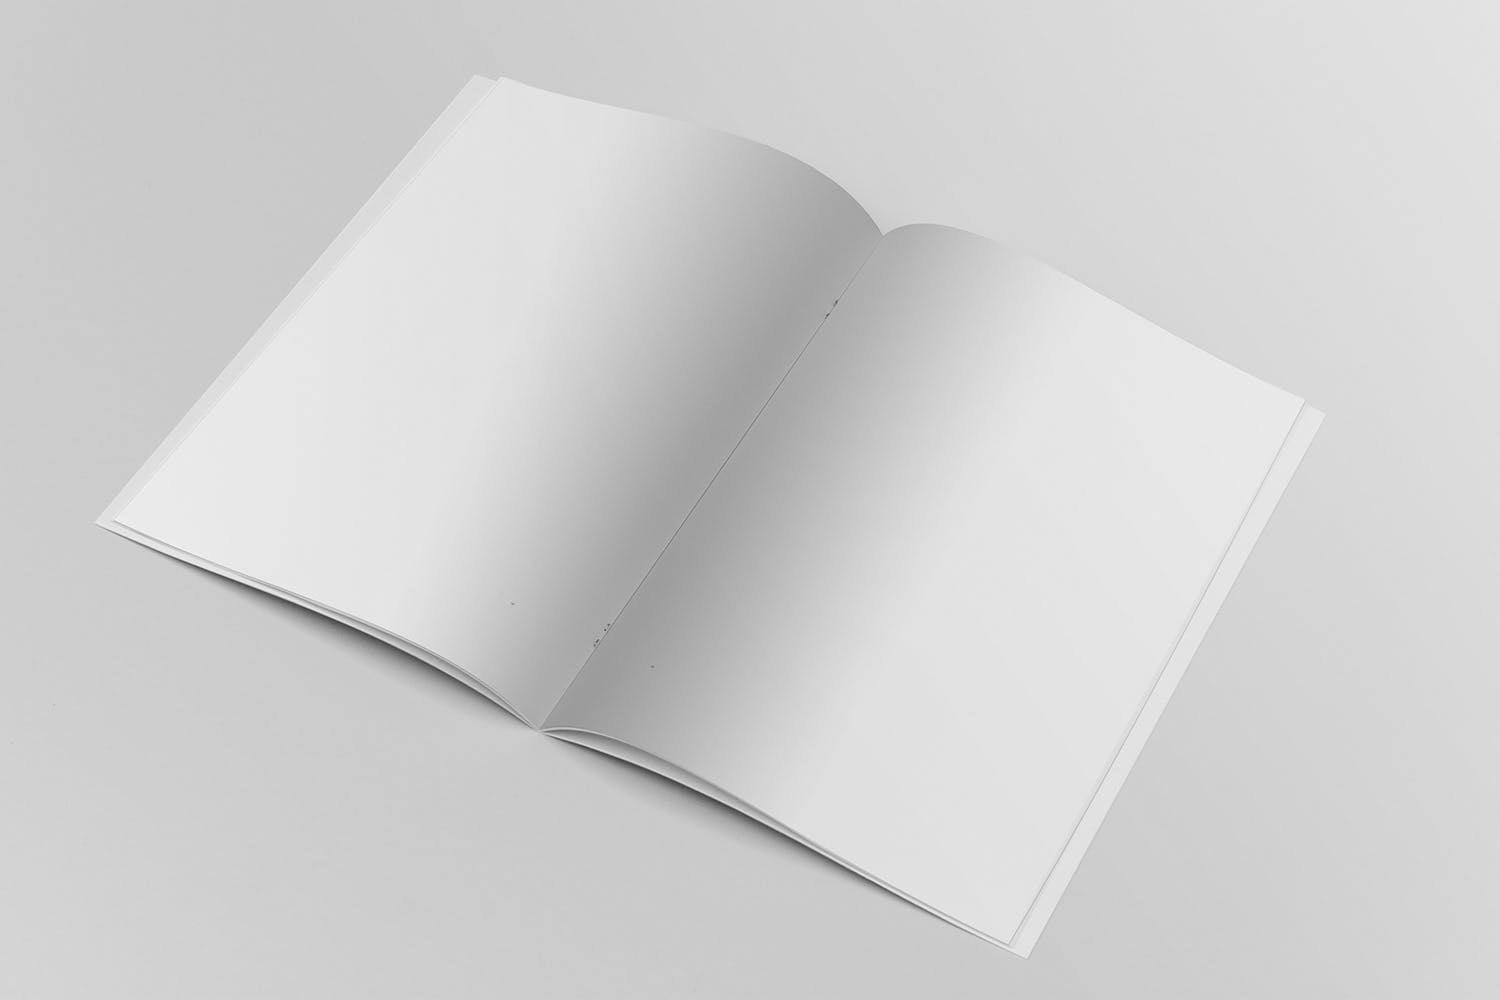 A4宣传小册子/企业画册内页排版设计效果图样机素材库精选 A4 Brochure Mockup Open Pages插图(1)